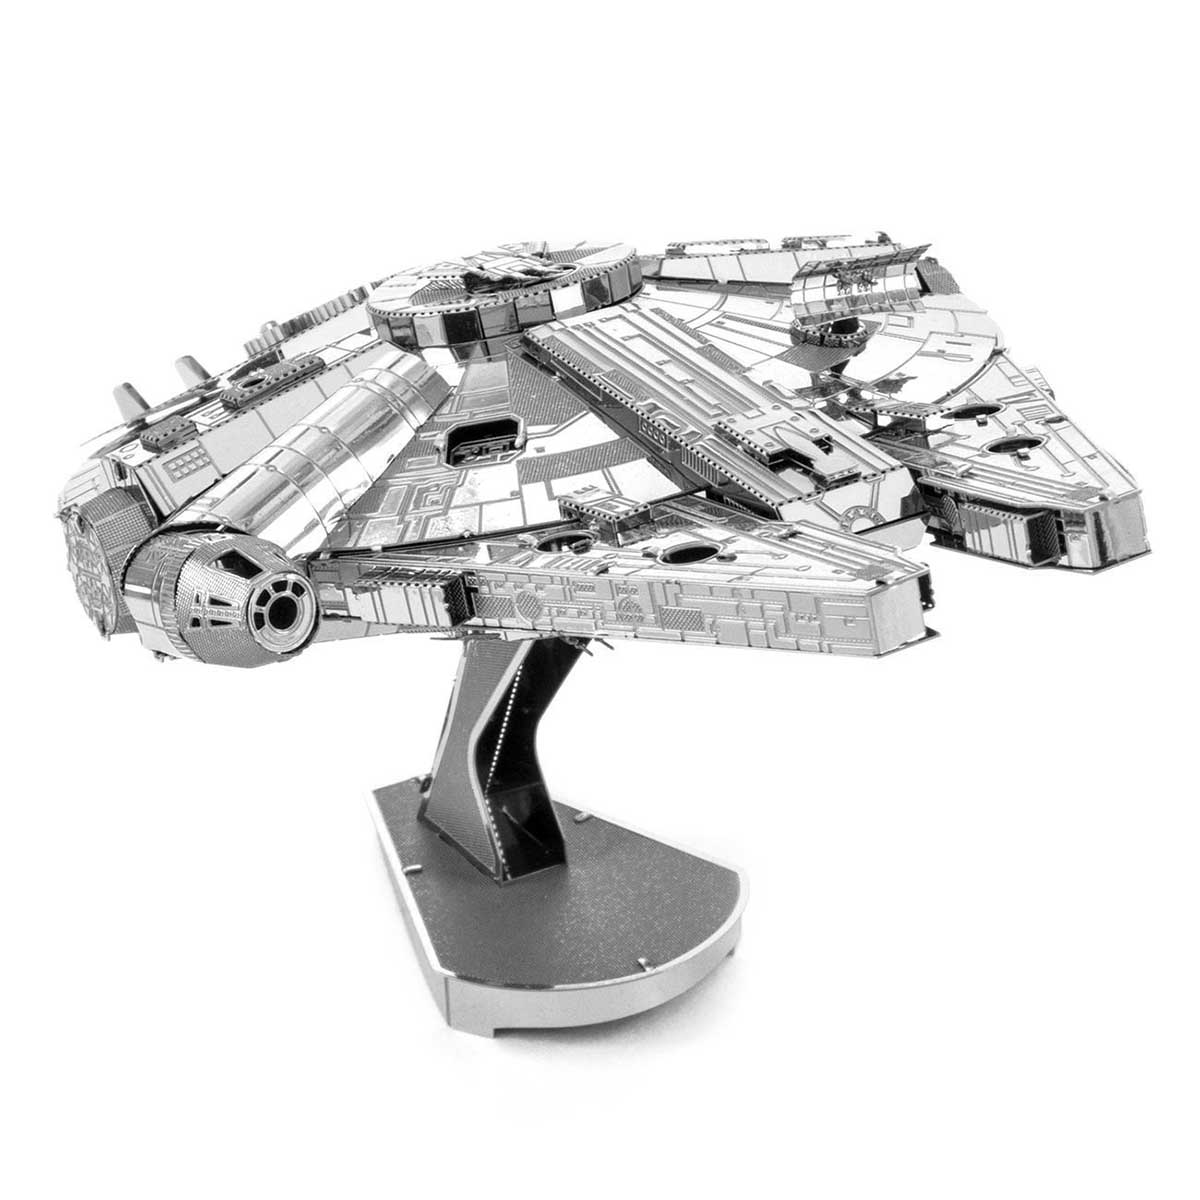 ICONX - Millennium Falcon Vehicles Metal Puzzles